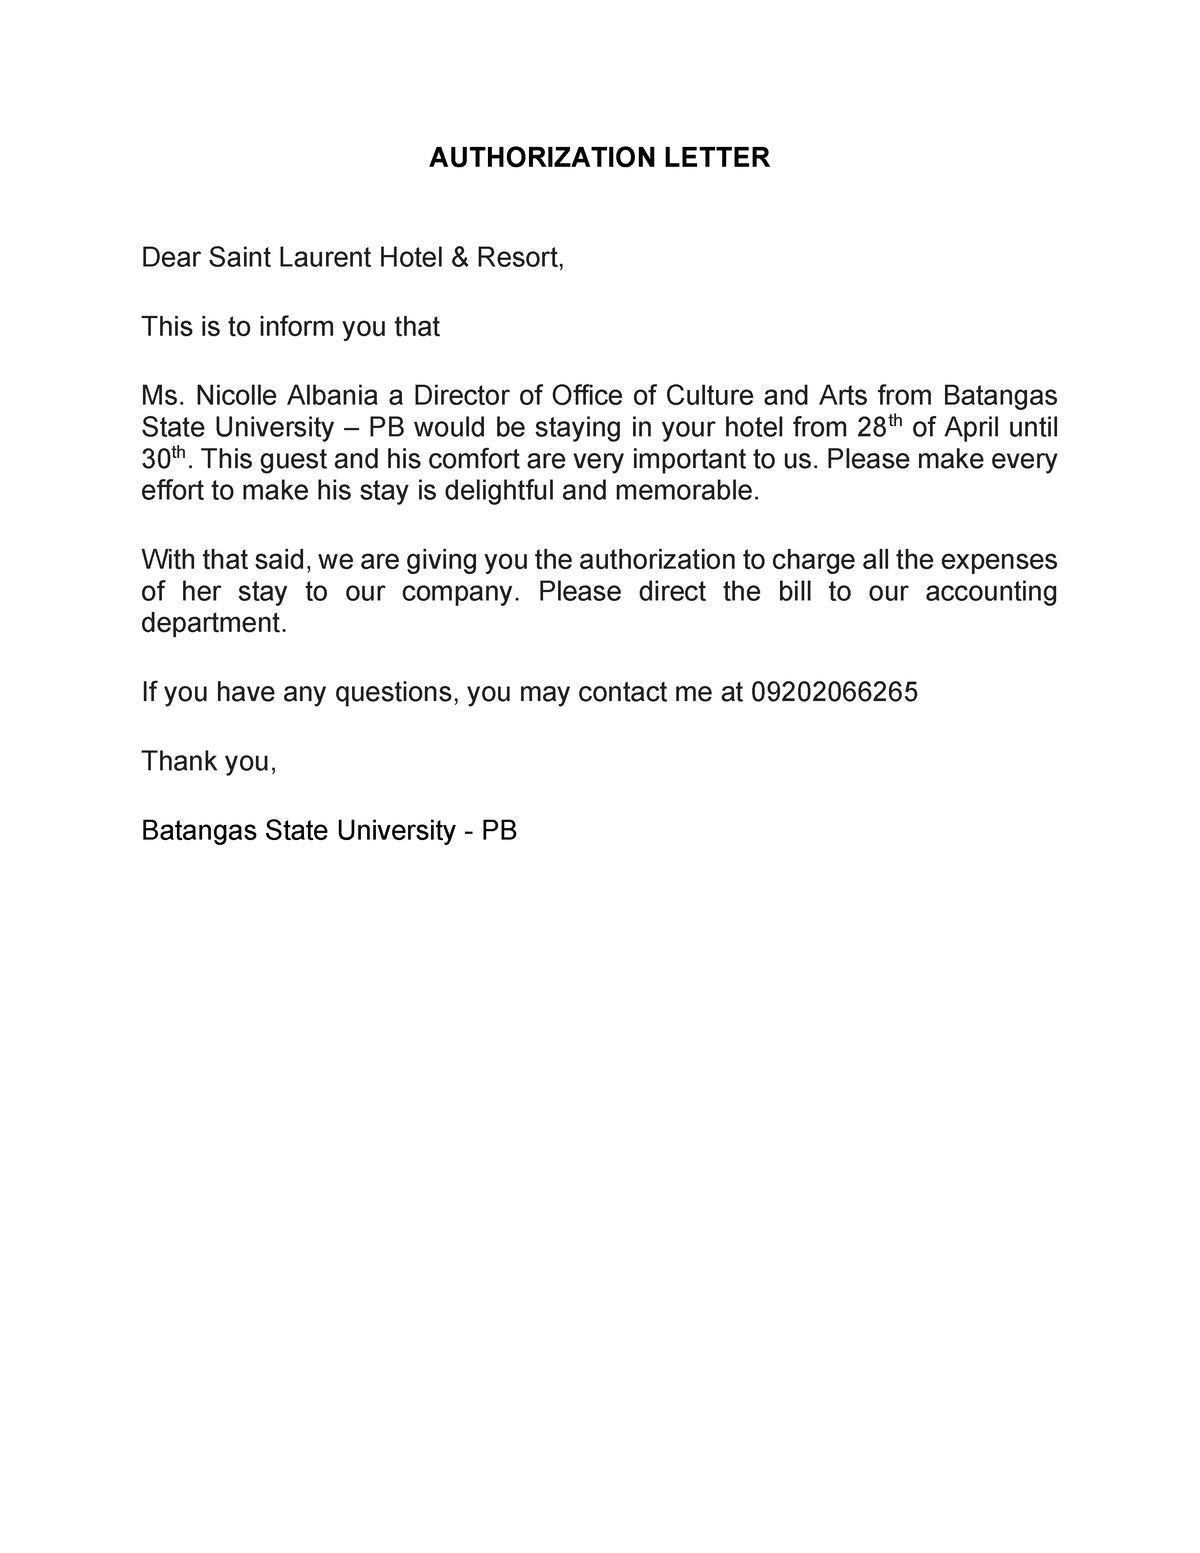 Authorization Letter Front Office Authorization Letter Dear Saint Laurent Hotel And Resort 3971